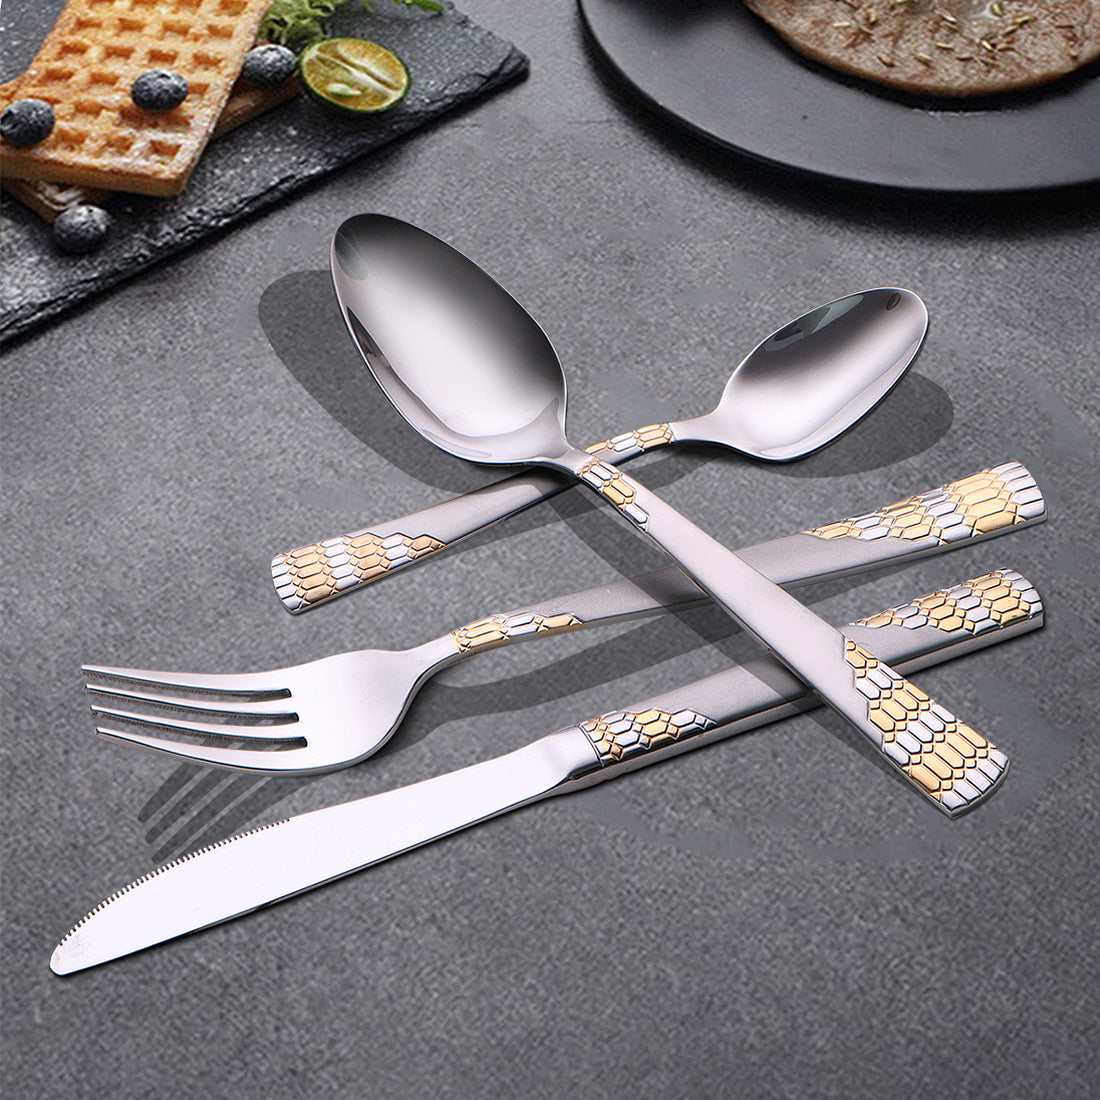 Best Premium Quality Cutlery Sets